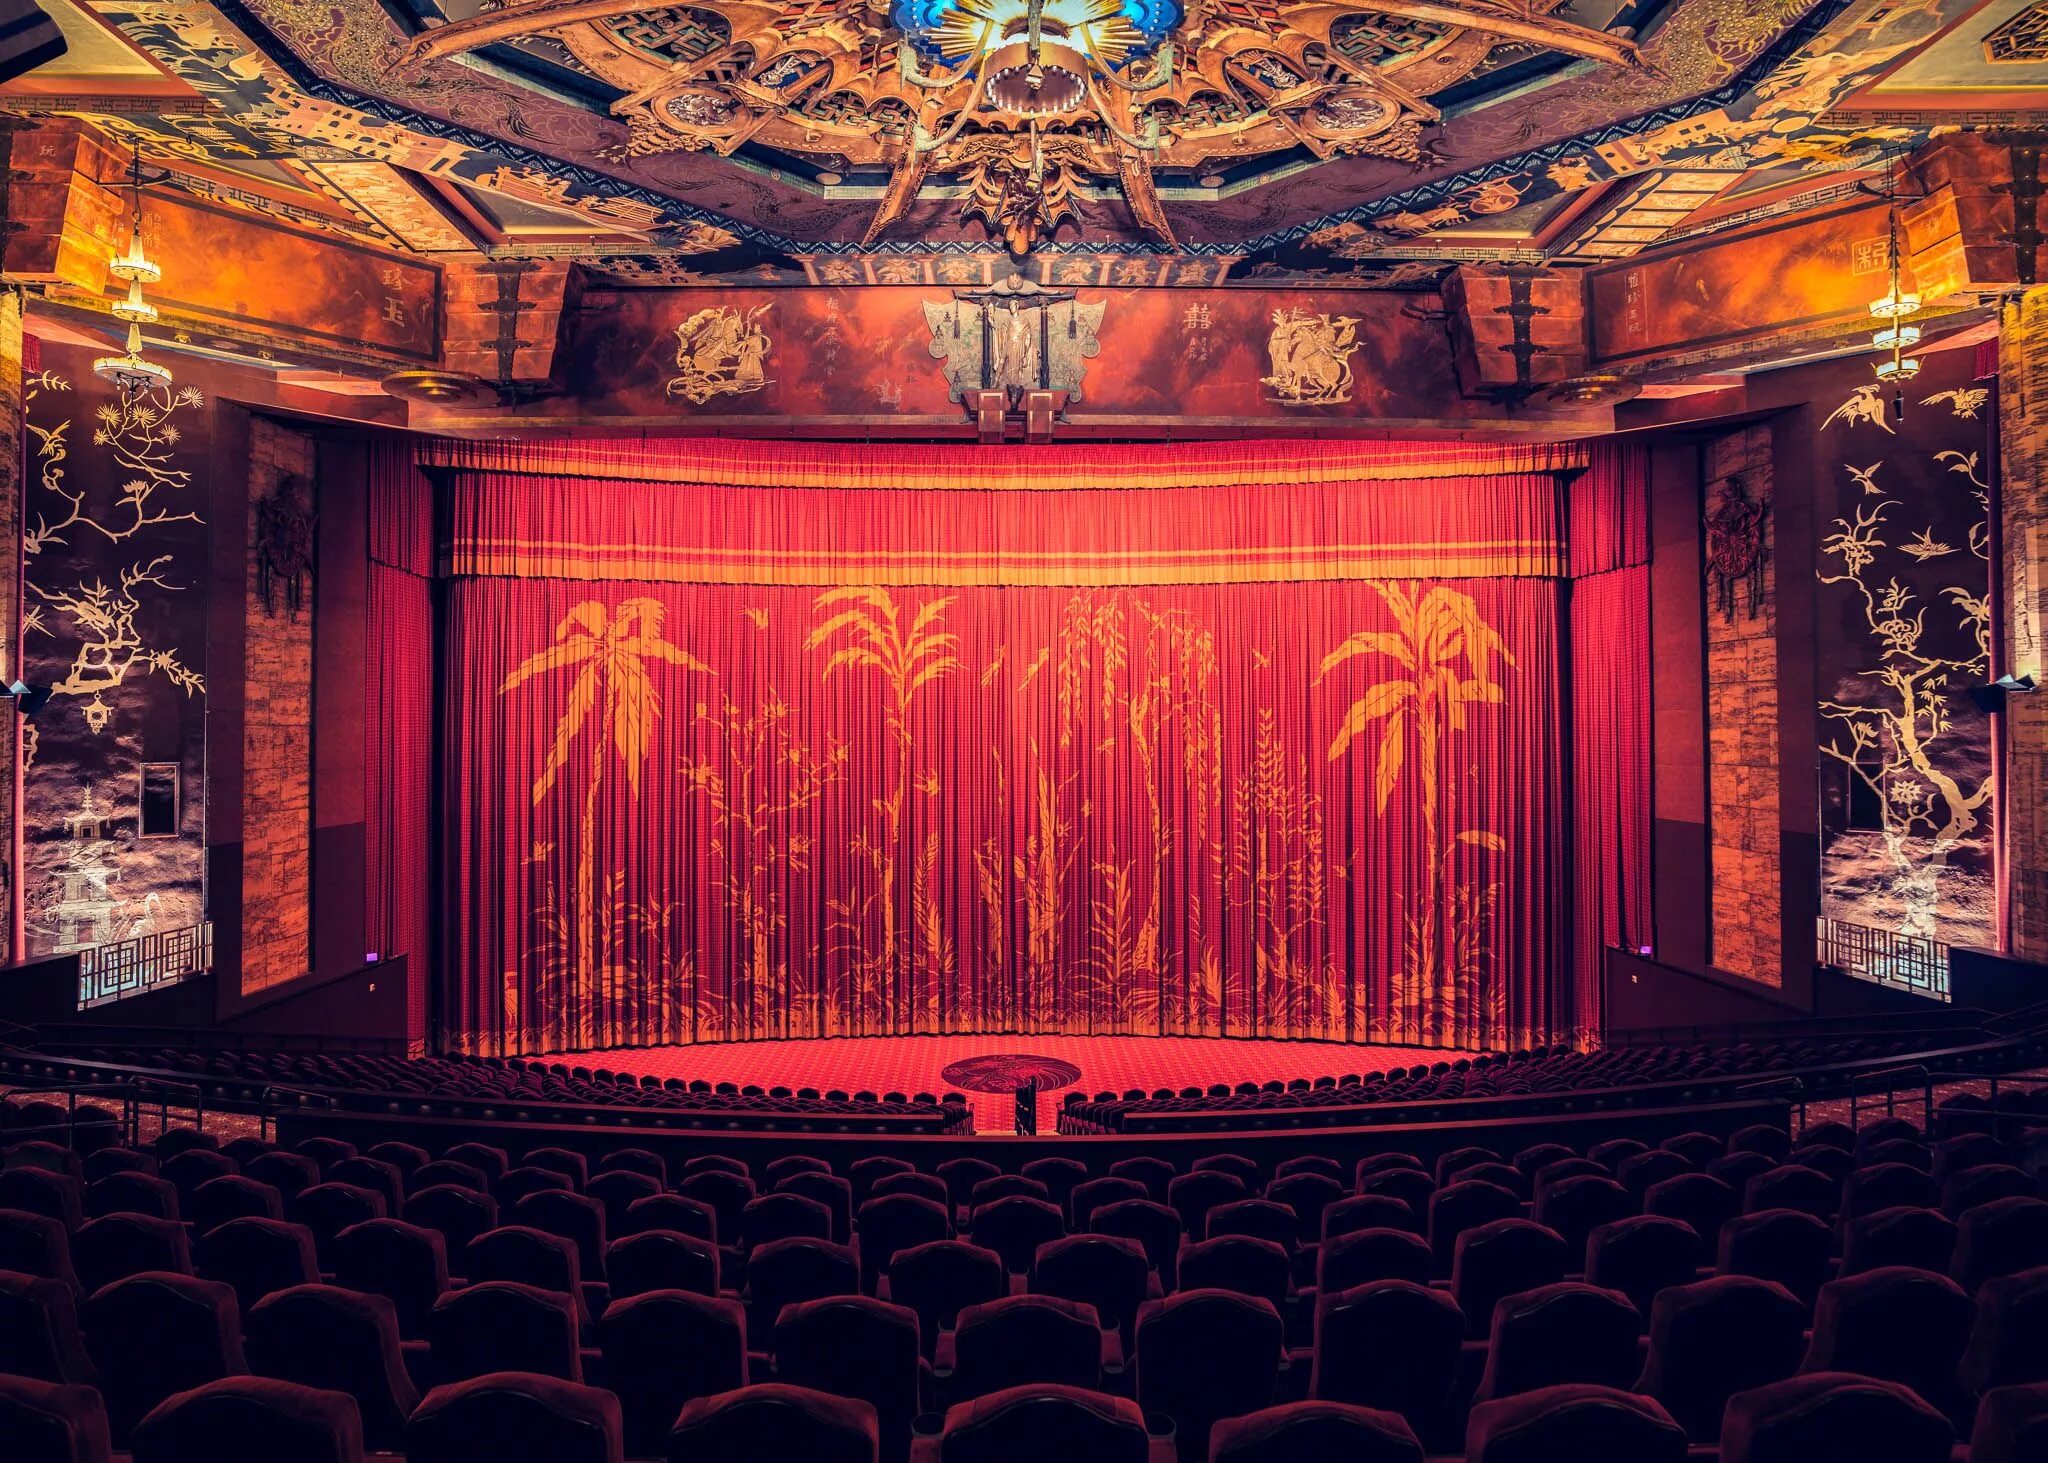 Театр Граумана в Лос-Анджелесе. Китайский театр Лос Анджелес. Китайский театр Граумана. Китайский кинотеатр Граумана в Лос-Анджелесе, США.